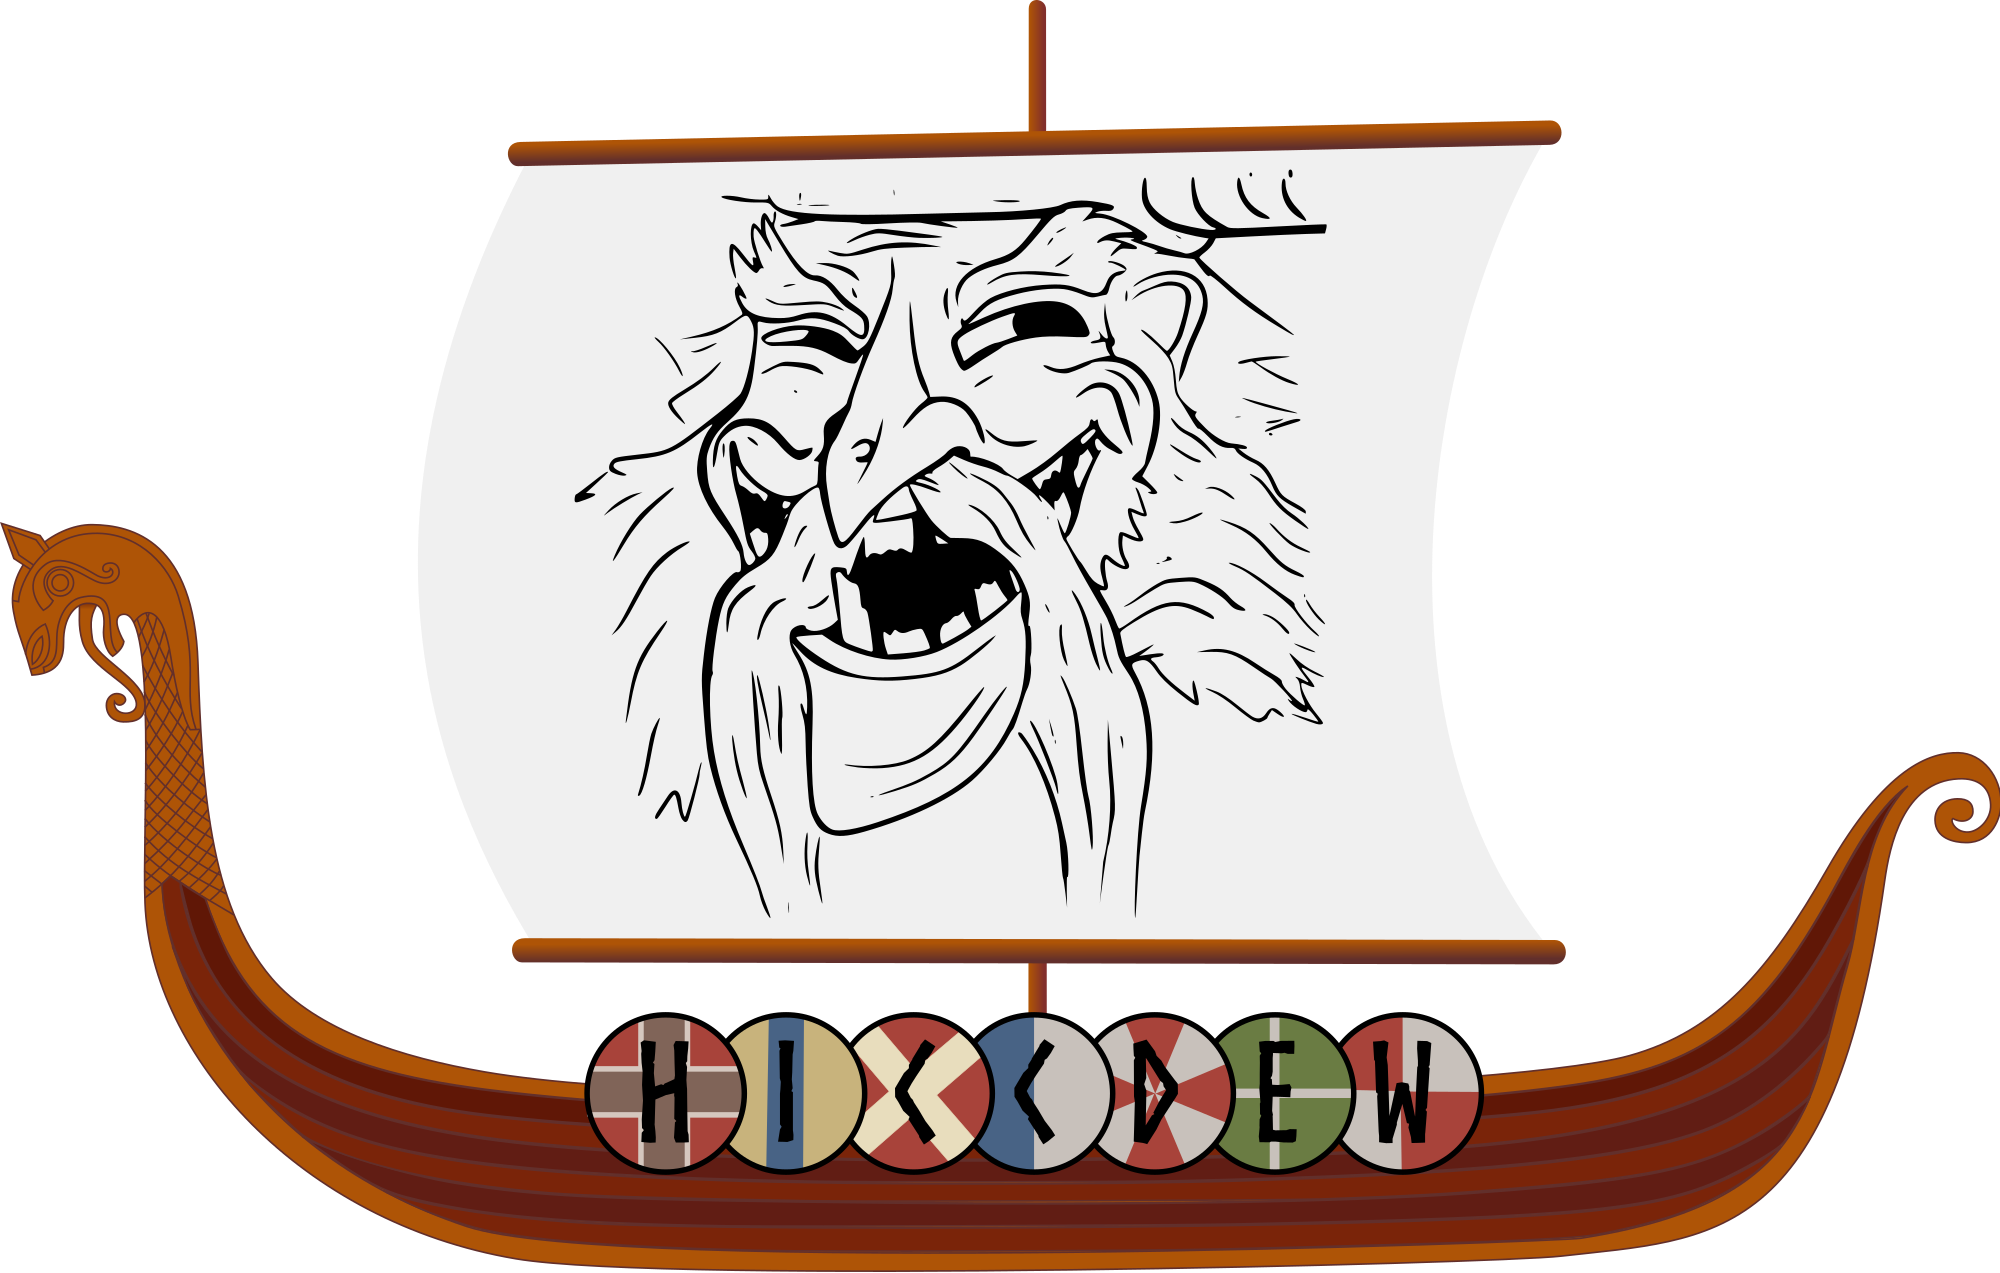 Dragon Boat Cliparts 7, Buy Clip Art - Wikimedia Commons (2000x1273)